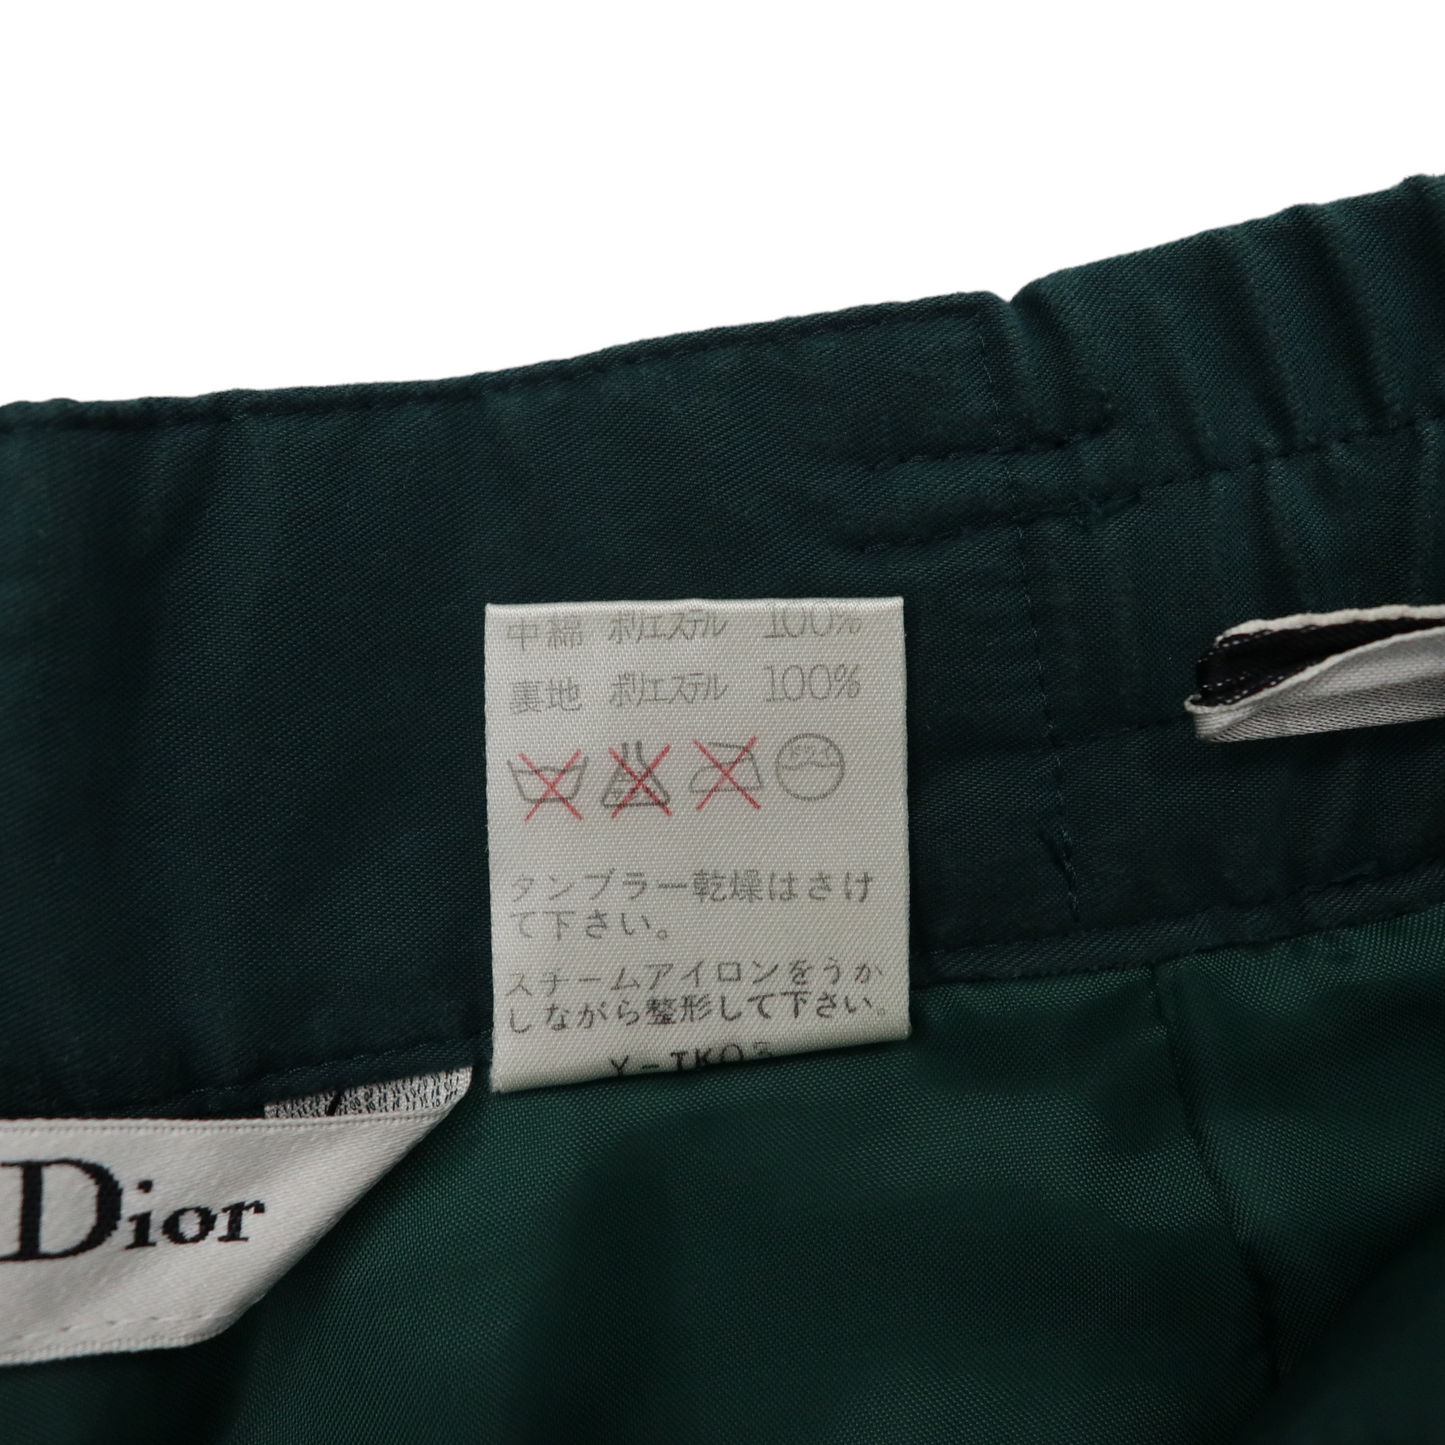 Christian Dior SPORTS テーパード パラシュートパンツ S グリーン 玉虫色 ポリエステル オールド